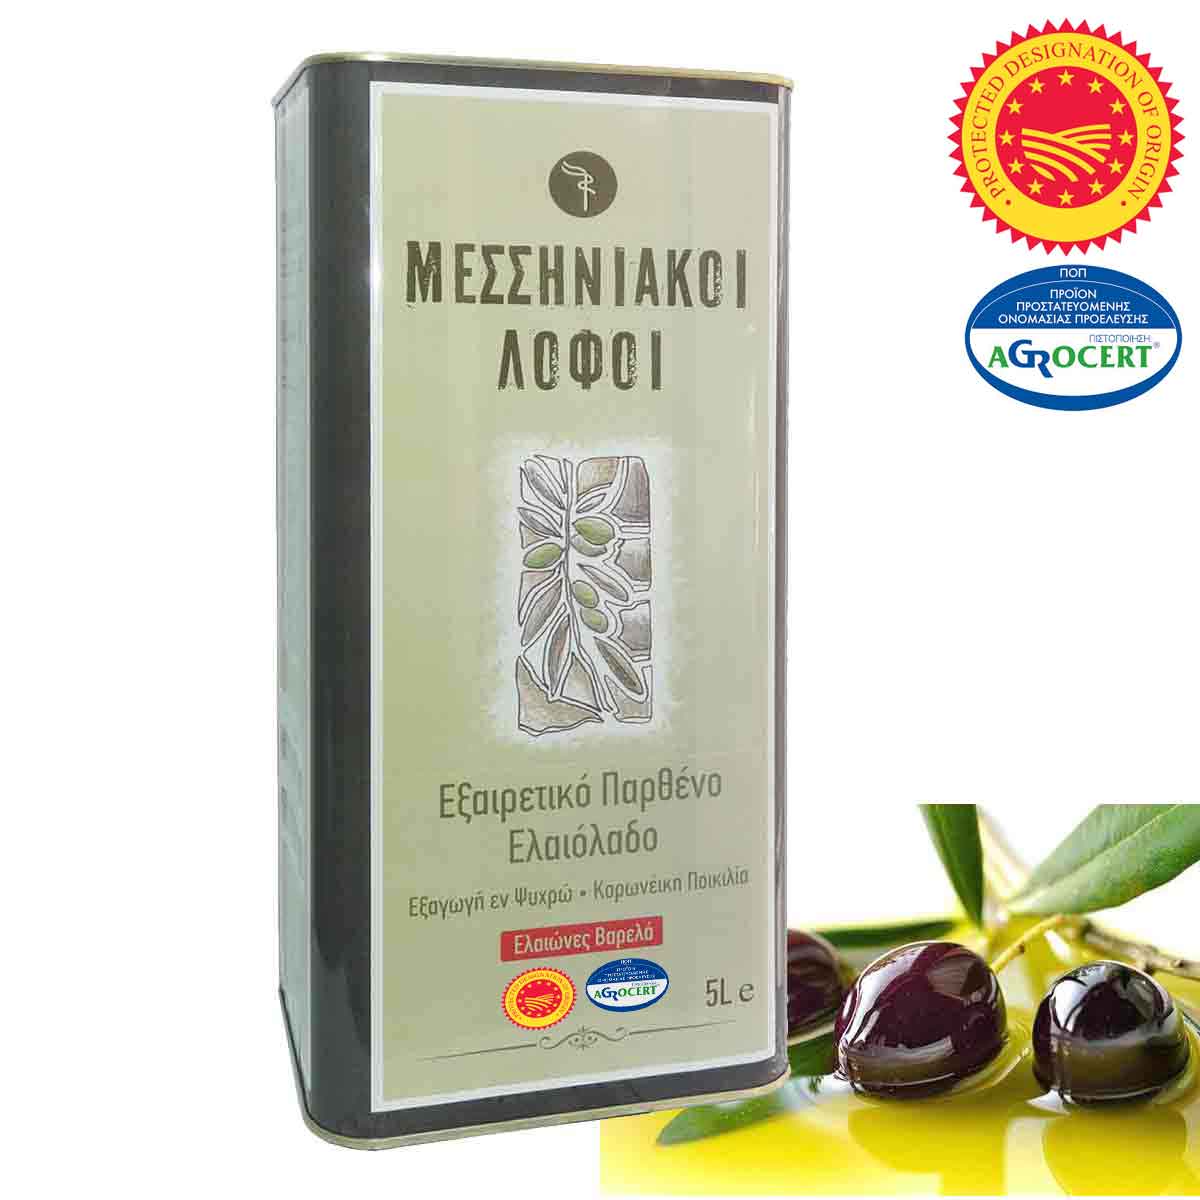 Extra Virgin Olive Oil, PDO Kalamata, 5lt, tin can, Koroneiko variety, "Messinian Hills"